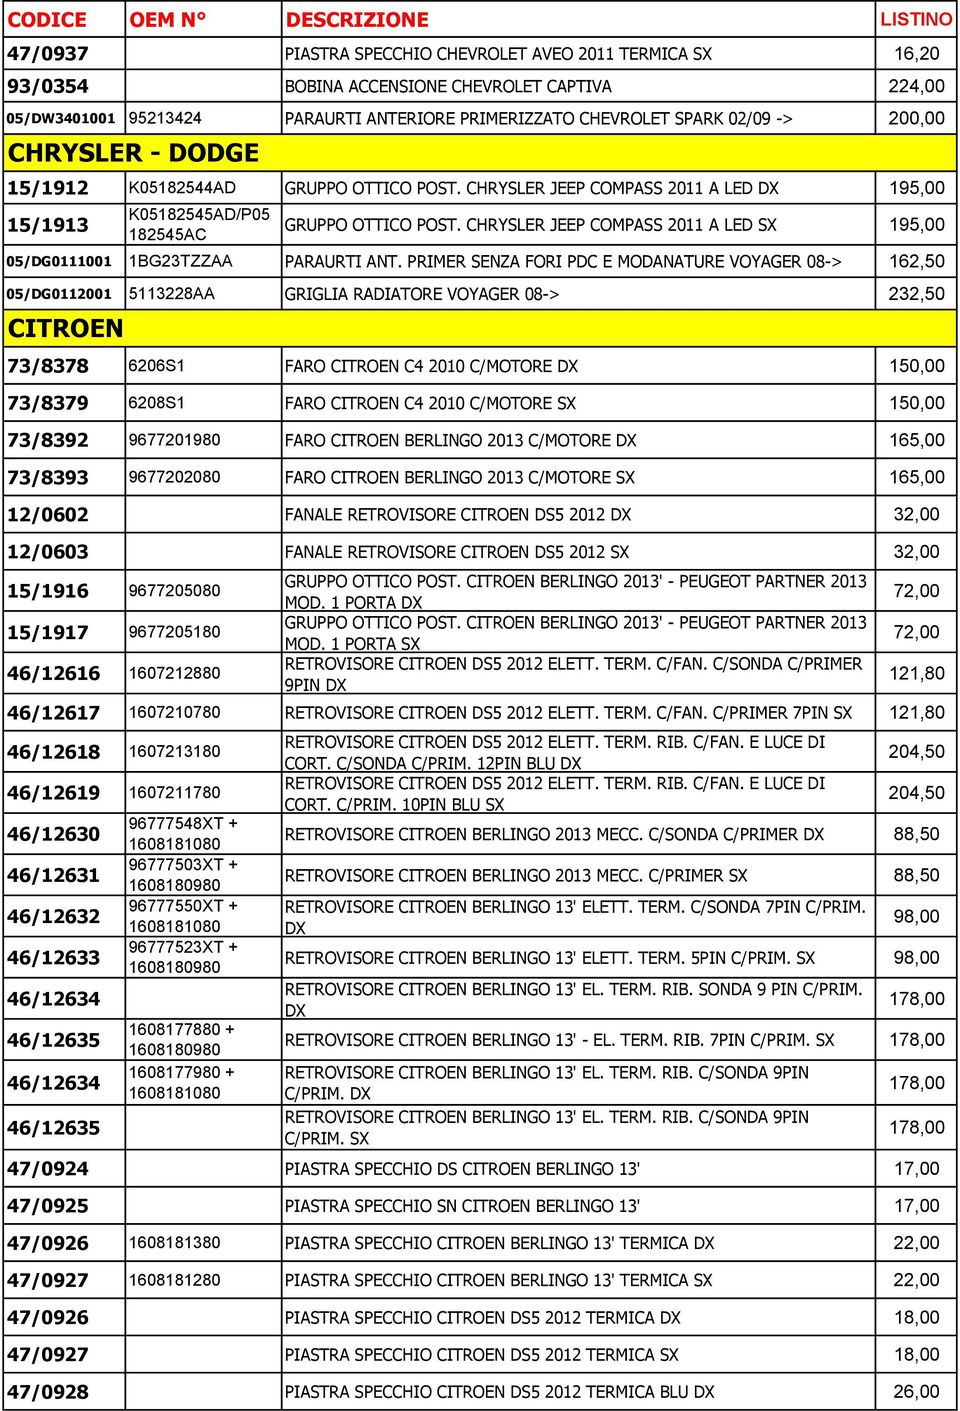 CHRYSLER JEEP COMPASS 2011 A LED SX 195,00 05/DG0111001 1BG23TZZAA PARAURTI ANT.